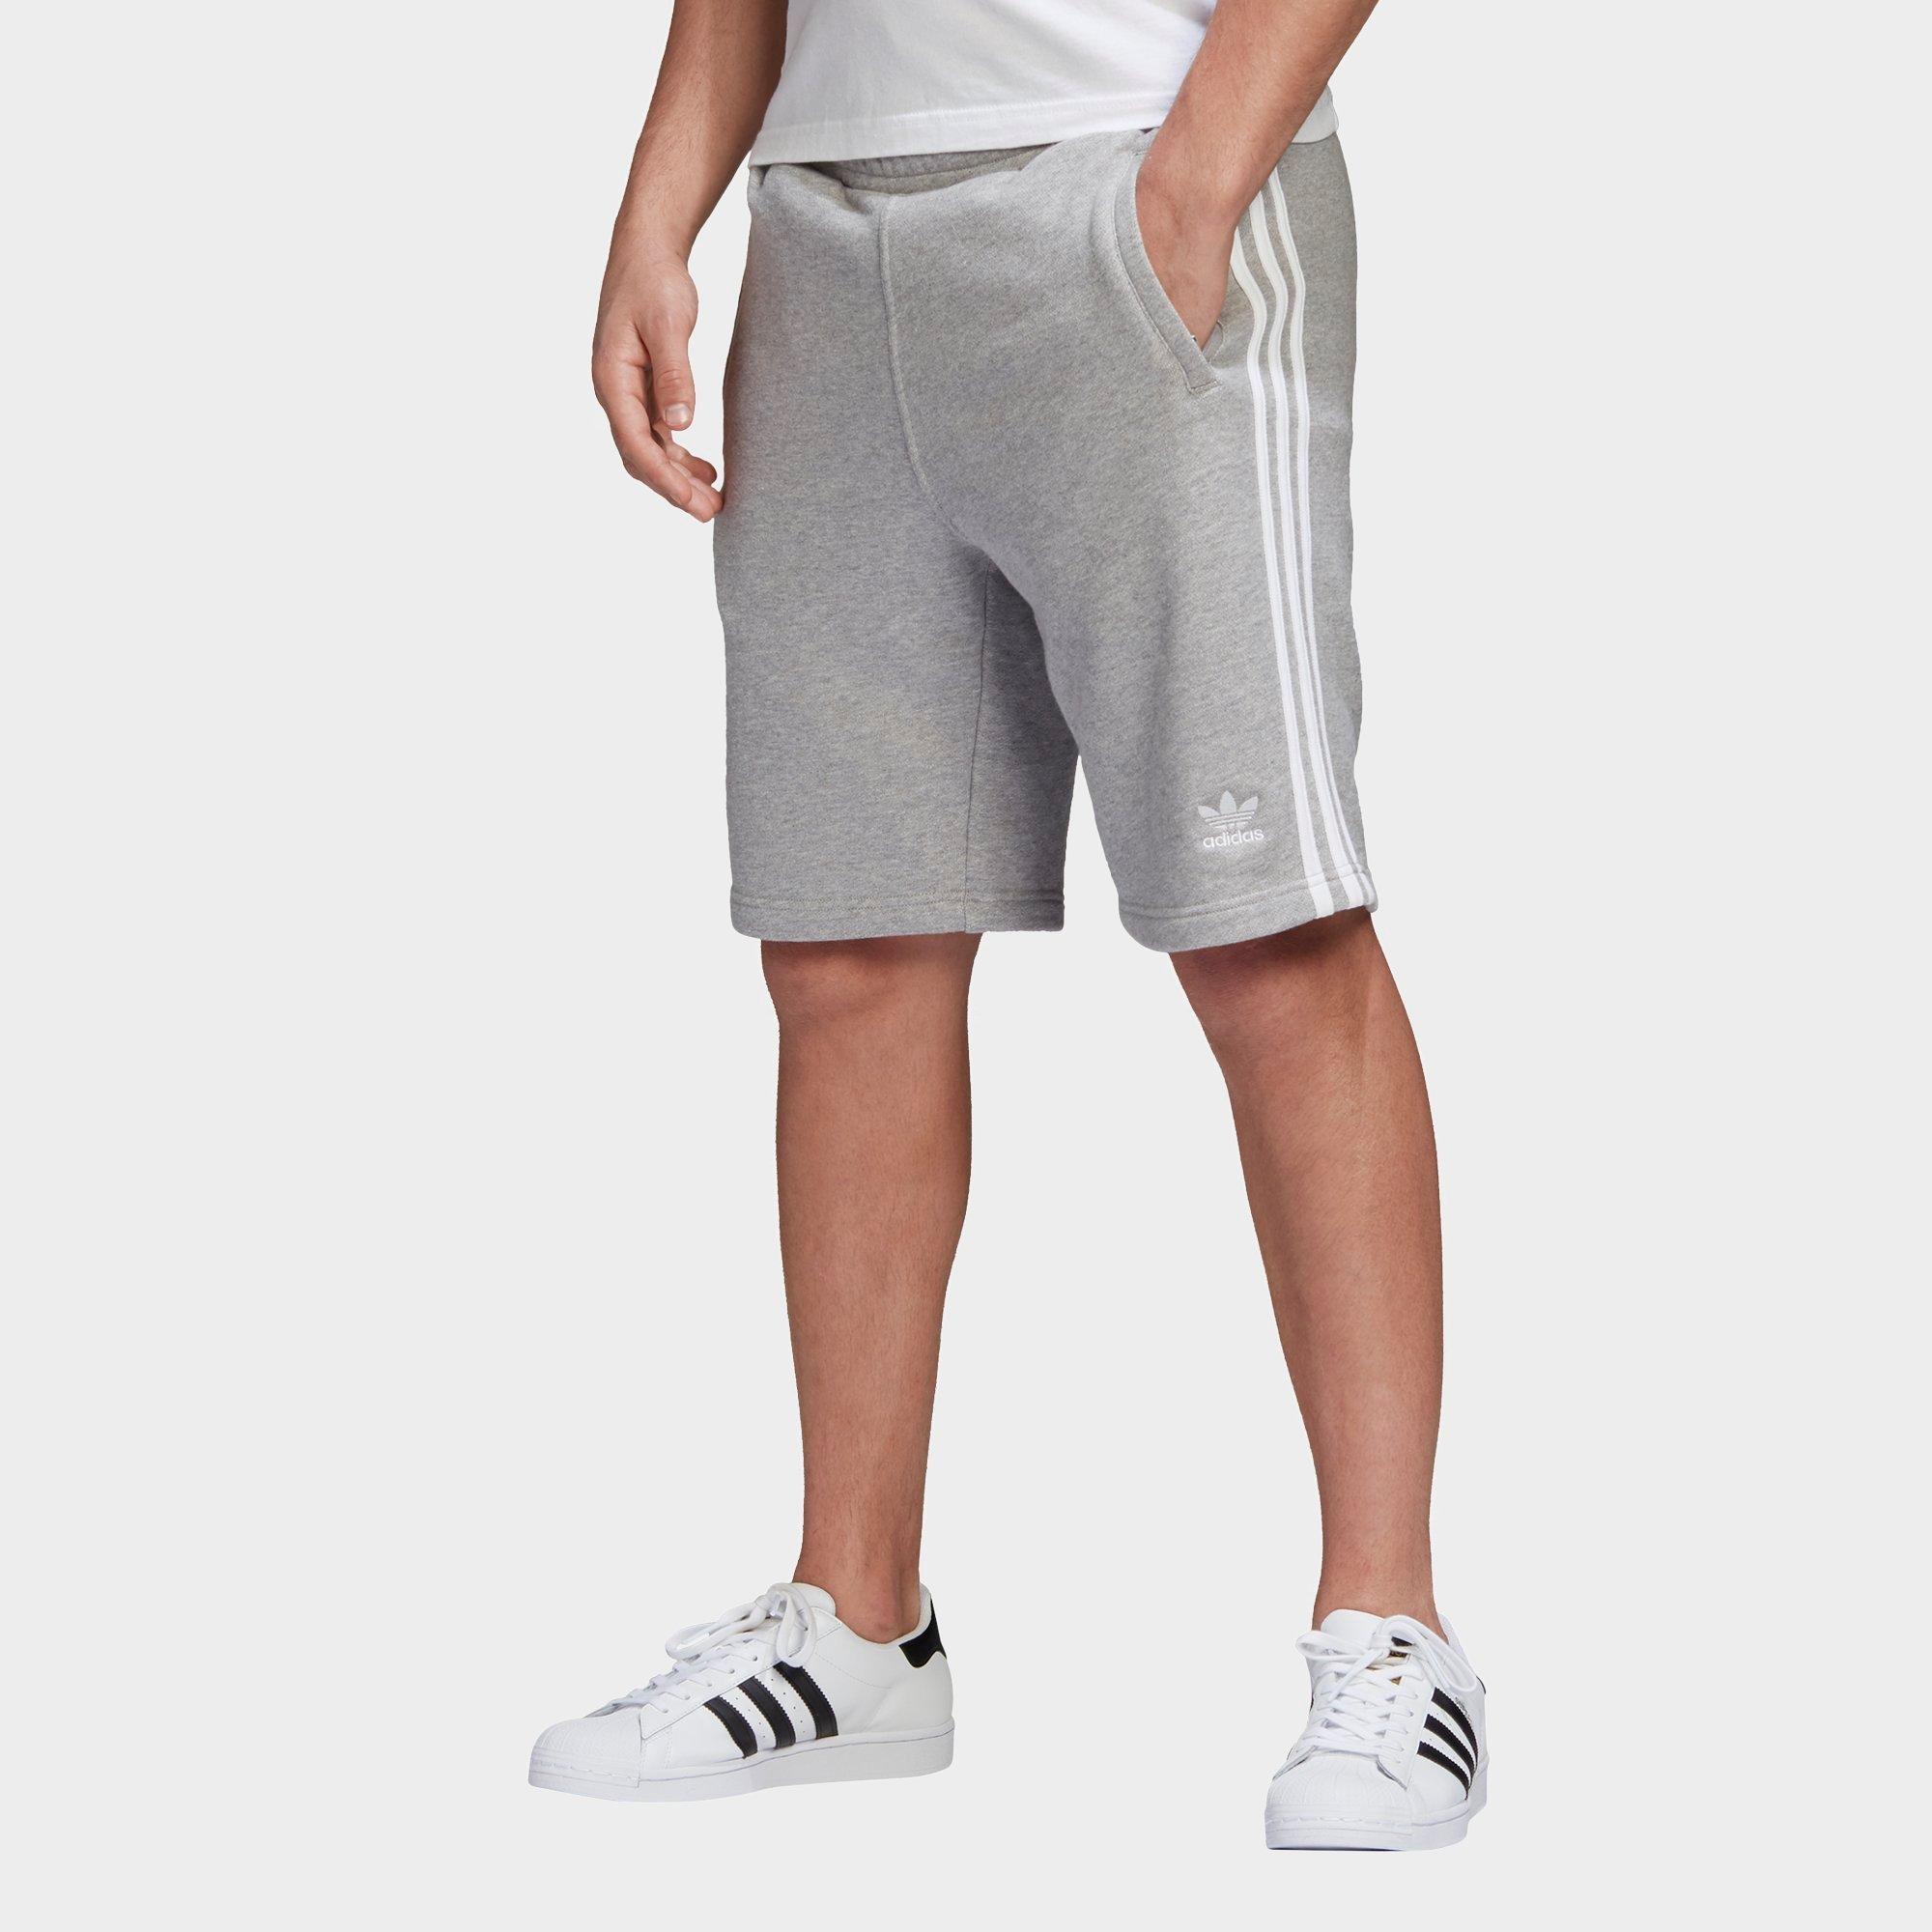 adidas 3 stripe shorts men's